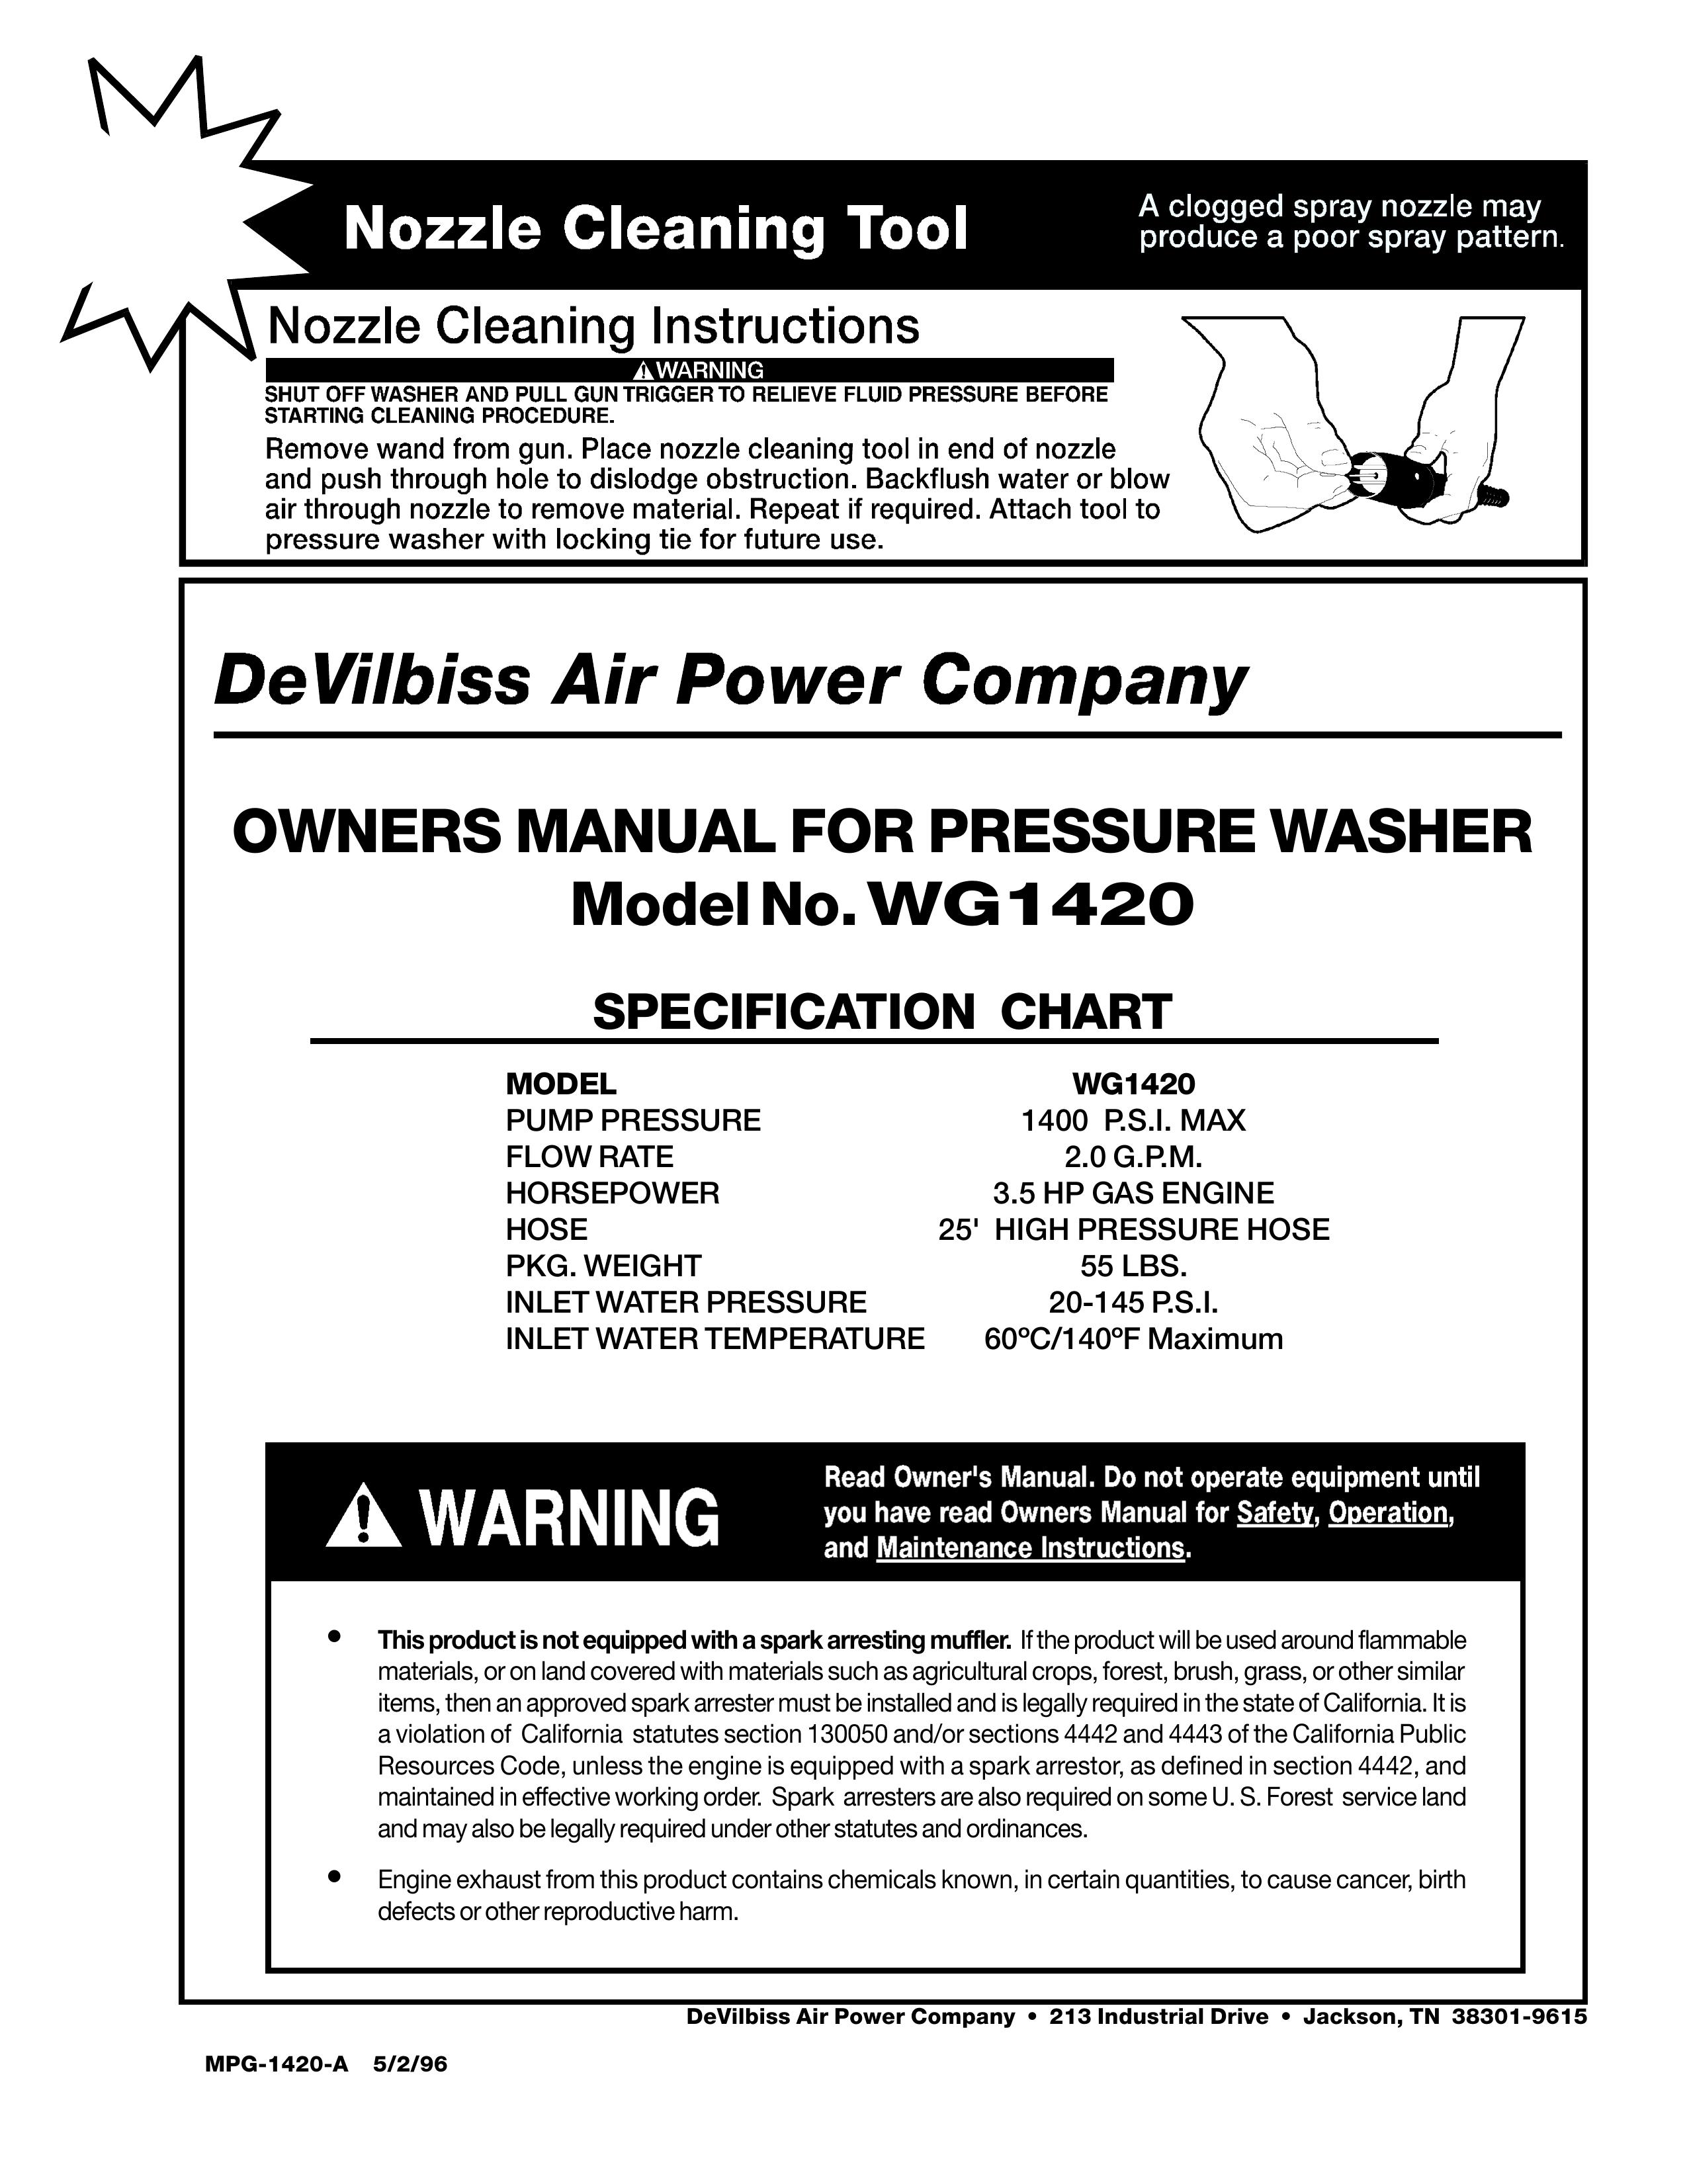 DeVillbiss Air Power Company WG1420 Pressure Washer User Manual